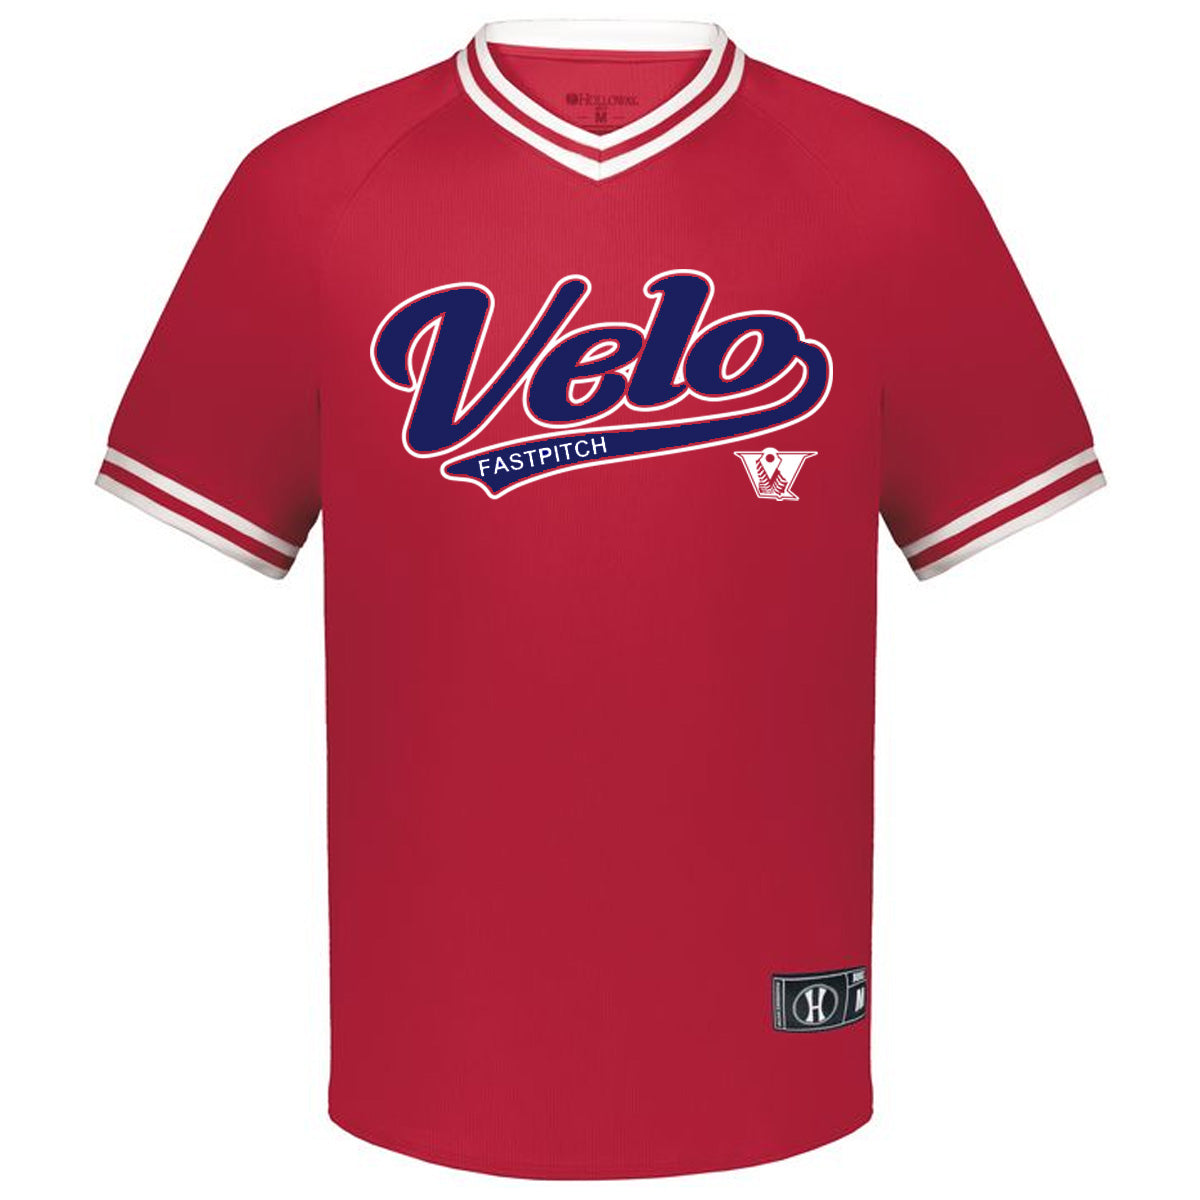 Velo FP - Velo Retro - Retro V-Neck Baseball Jersey - Red/White (221021) - Southern Grace Creations